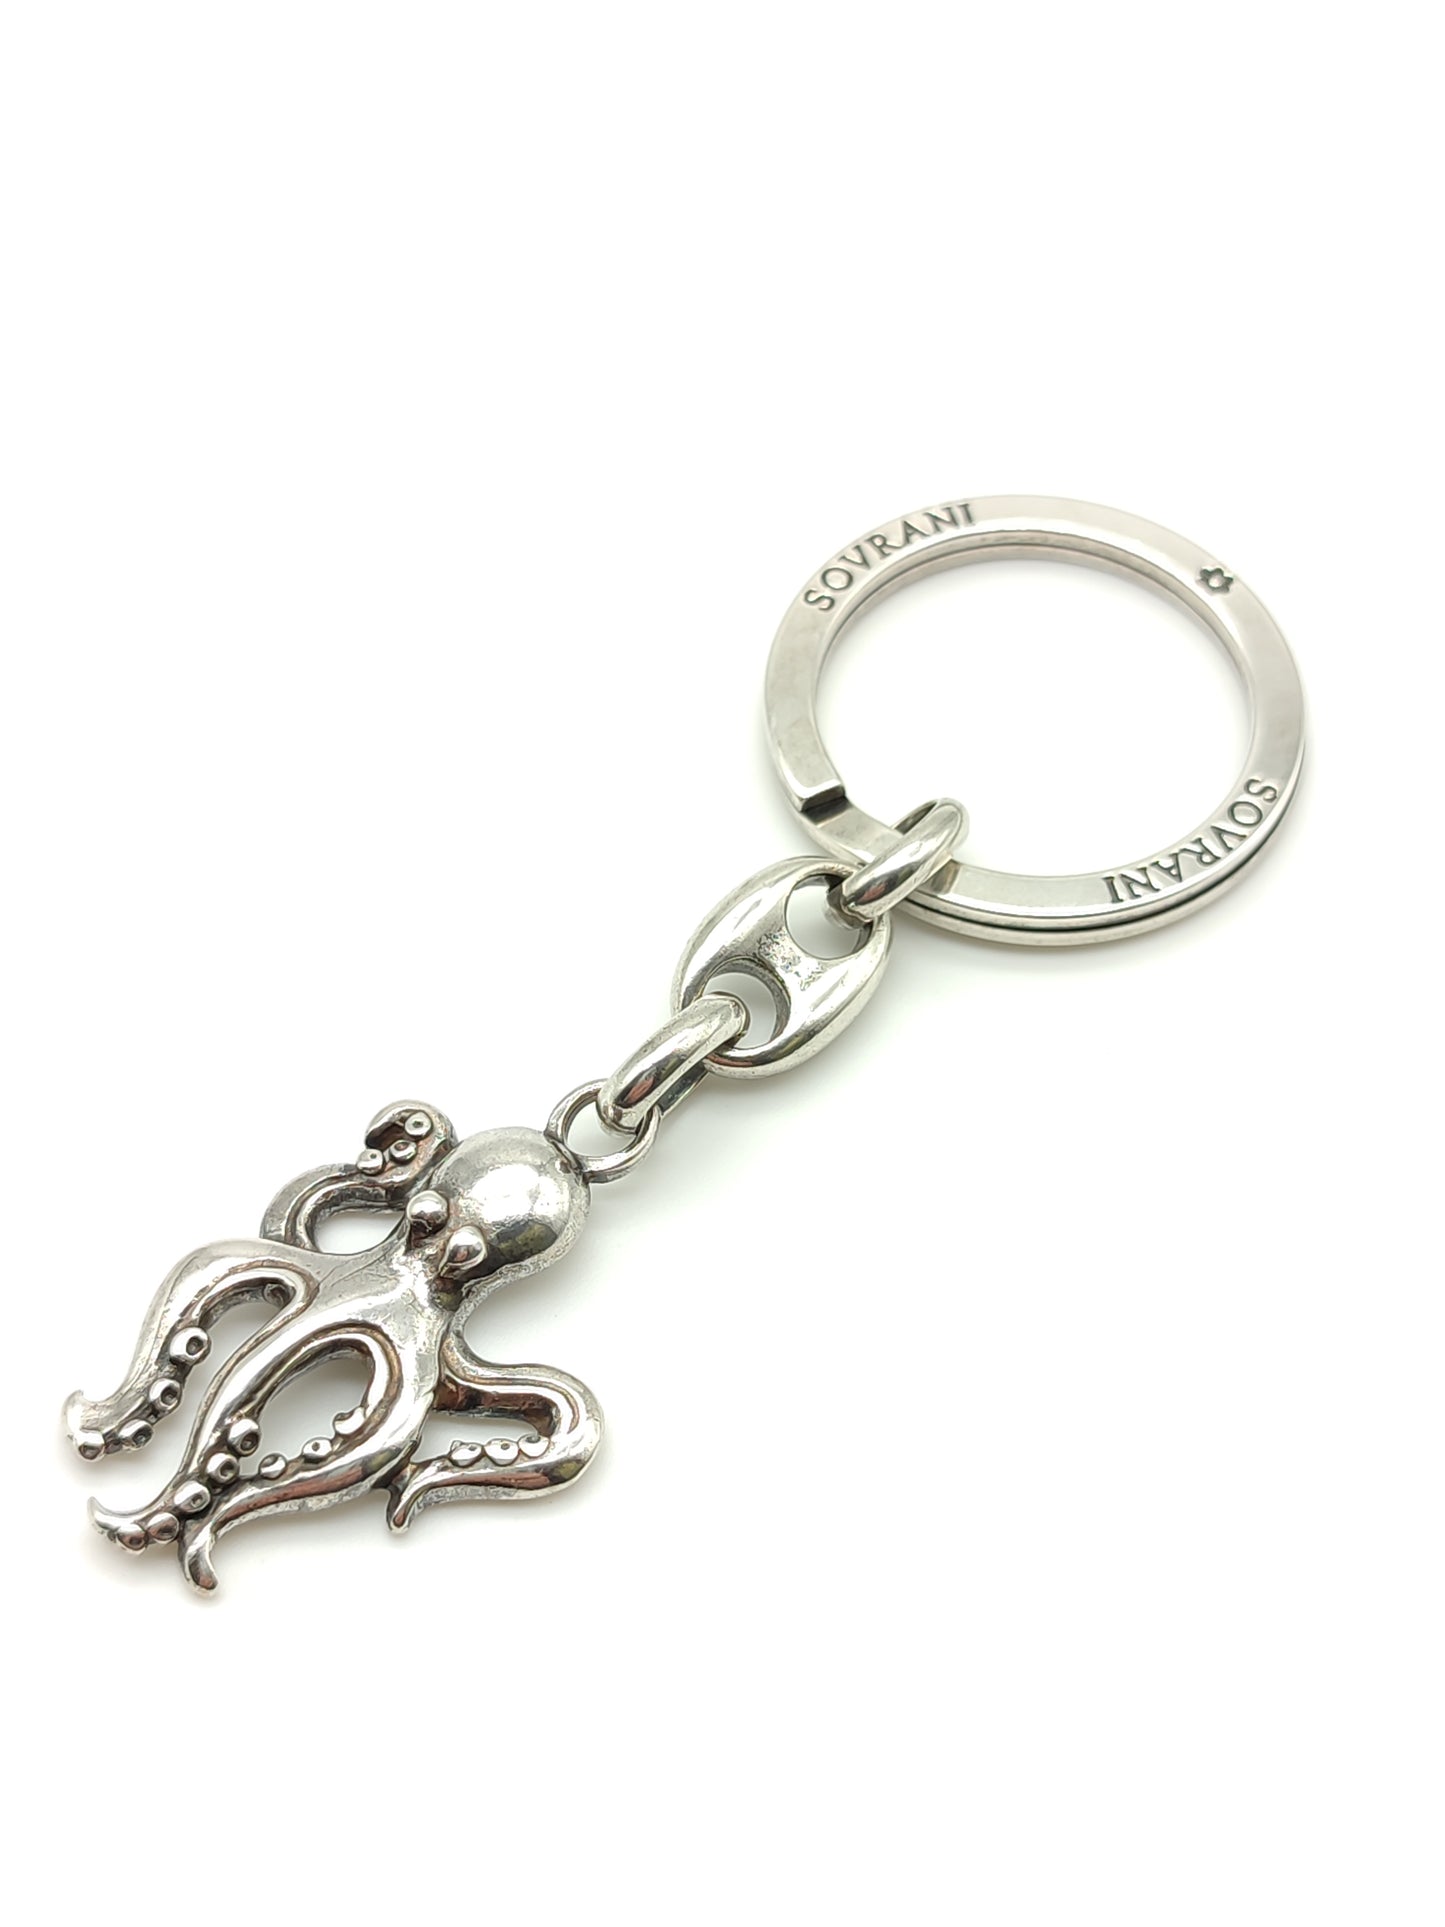 Octopus silver key ring